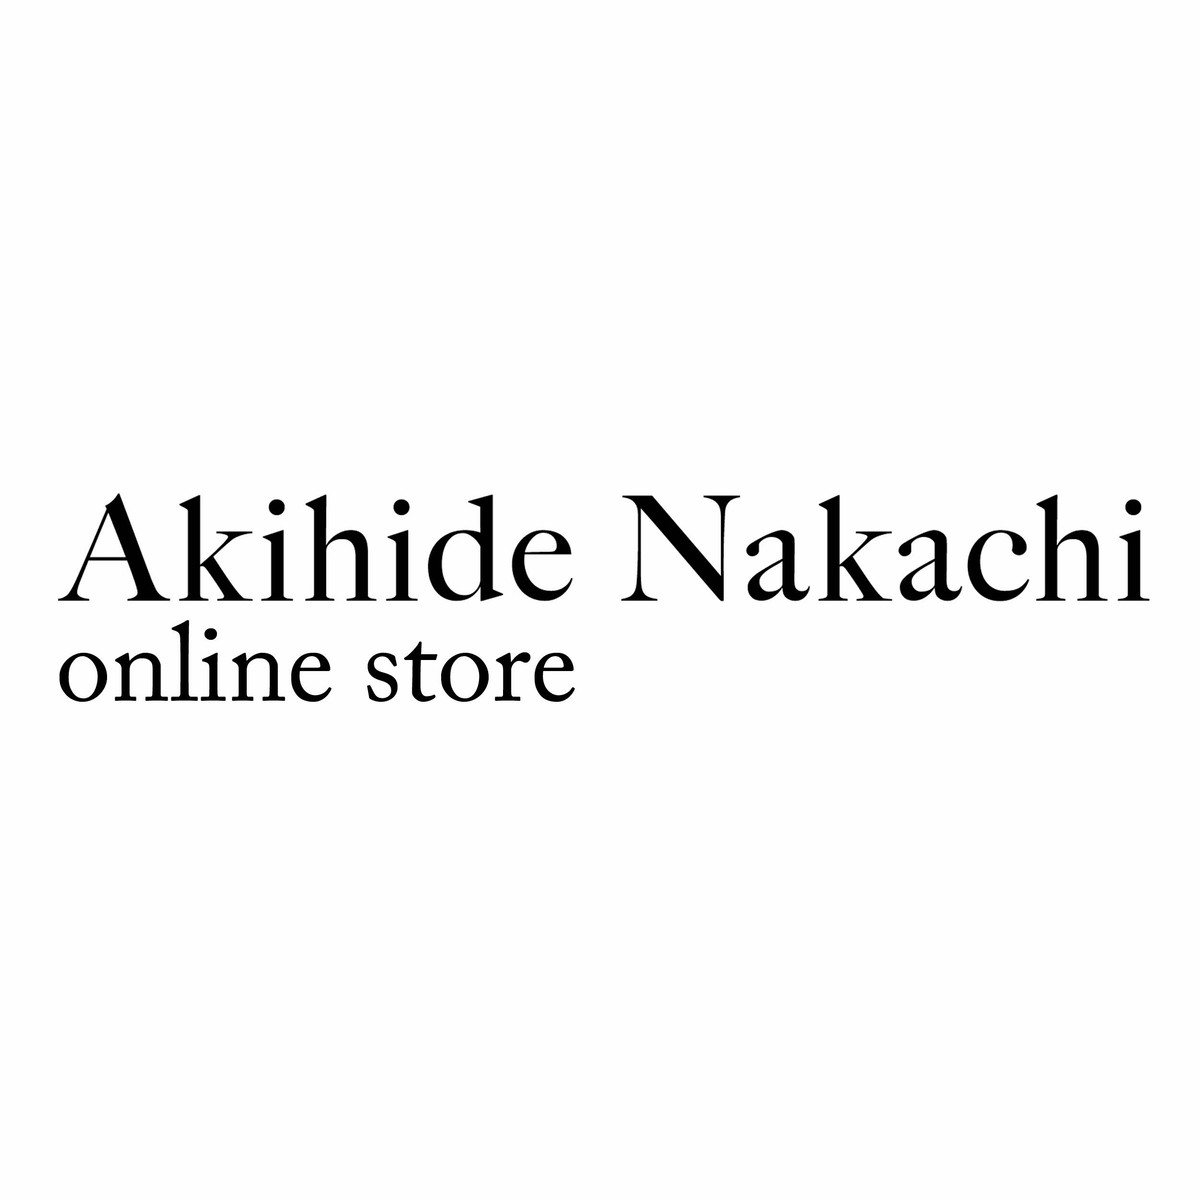 Akihide Nakachi Online Store